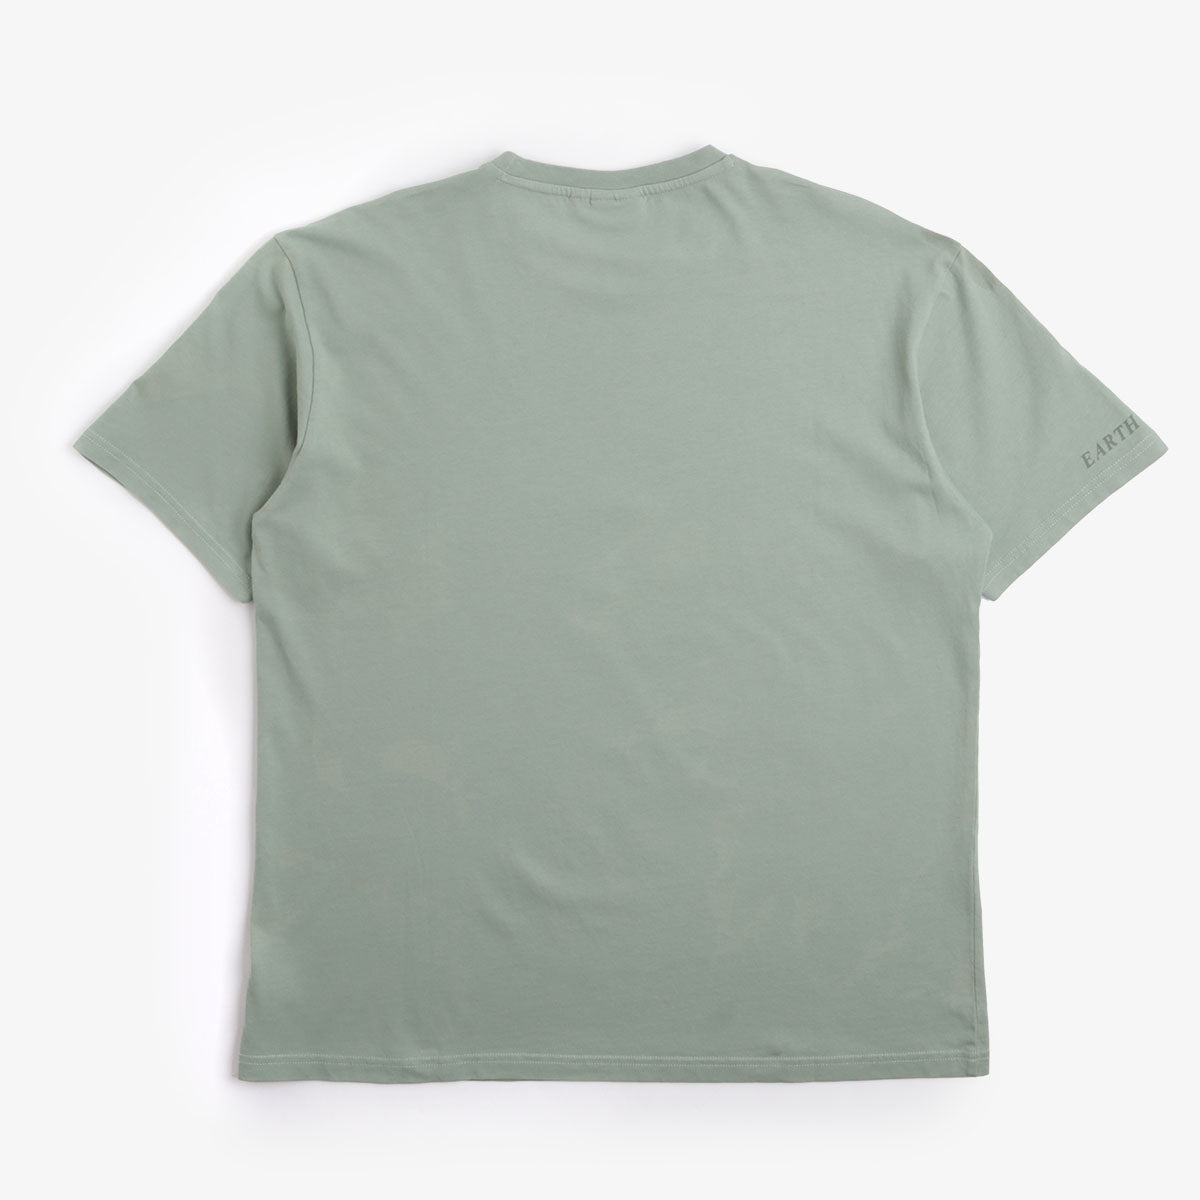 OBEY x Napapijri T-Shirt, Green Fairmont, Detail Shot 4